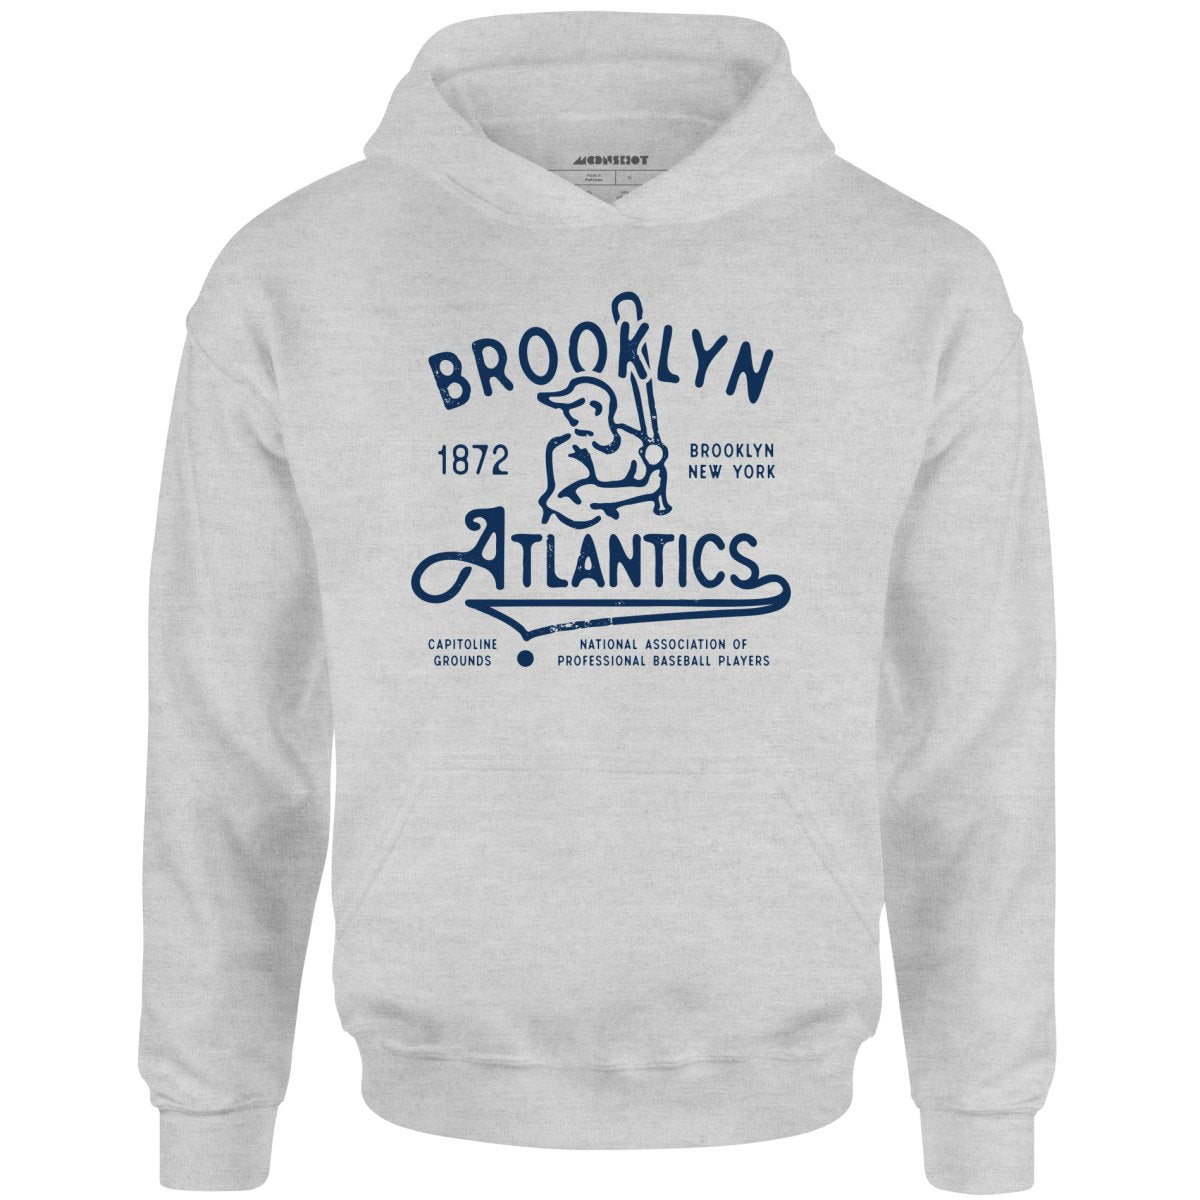 Brooklyn Atlantics - New York - Vintage Defunct Baseball Teams - Unisex Hoodie